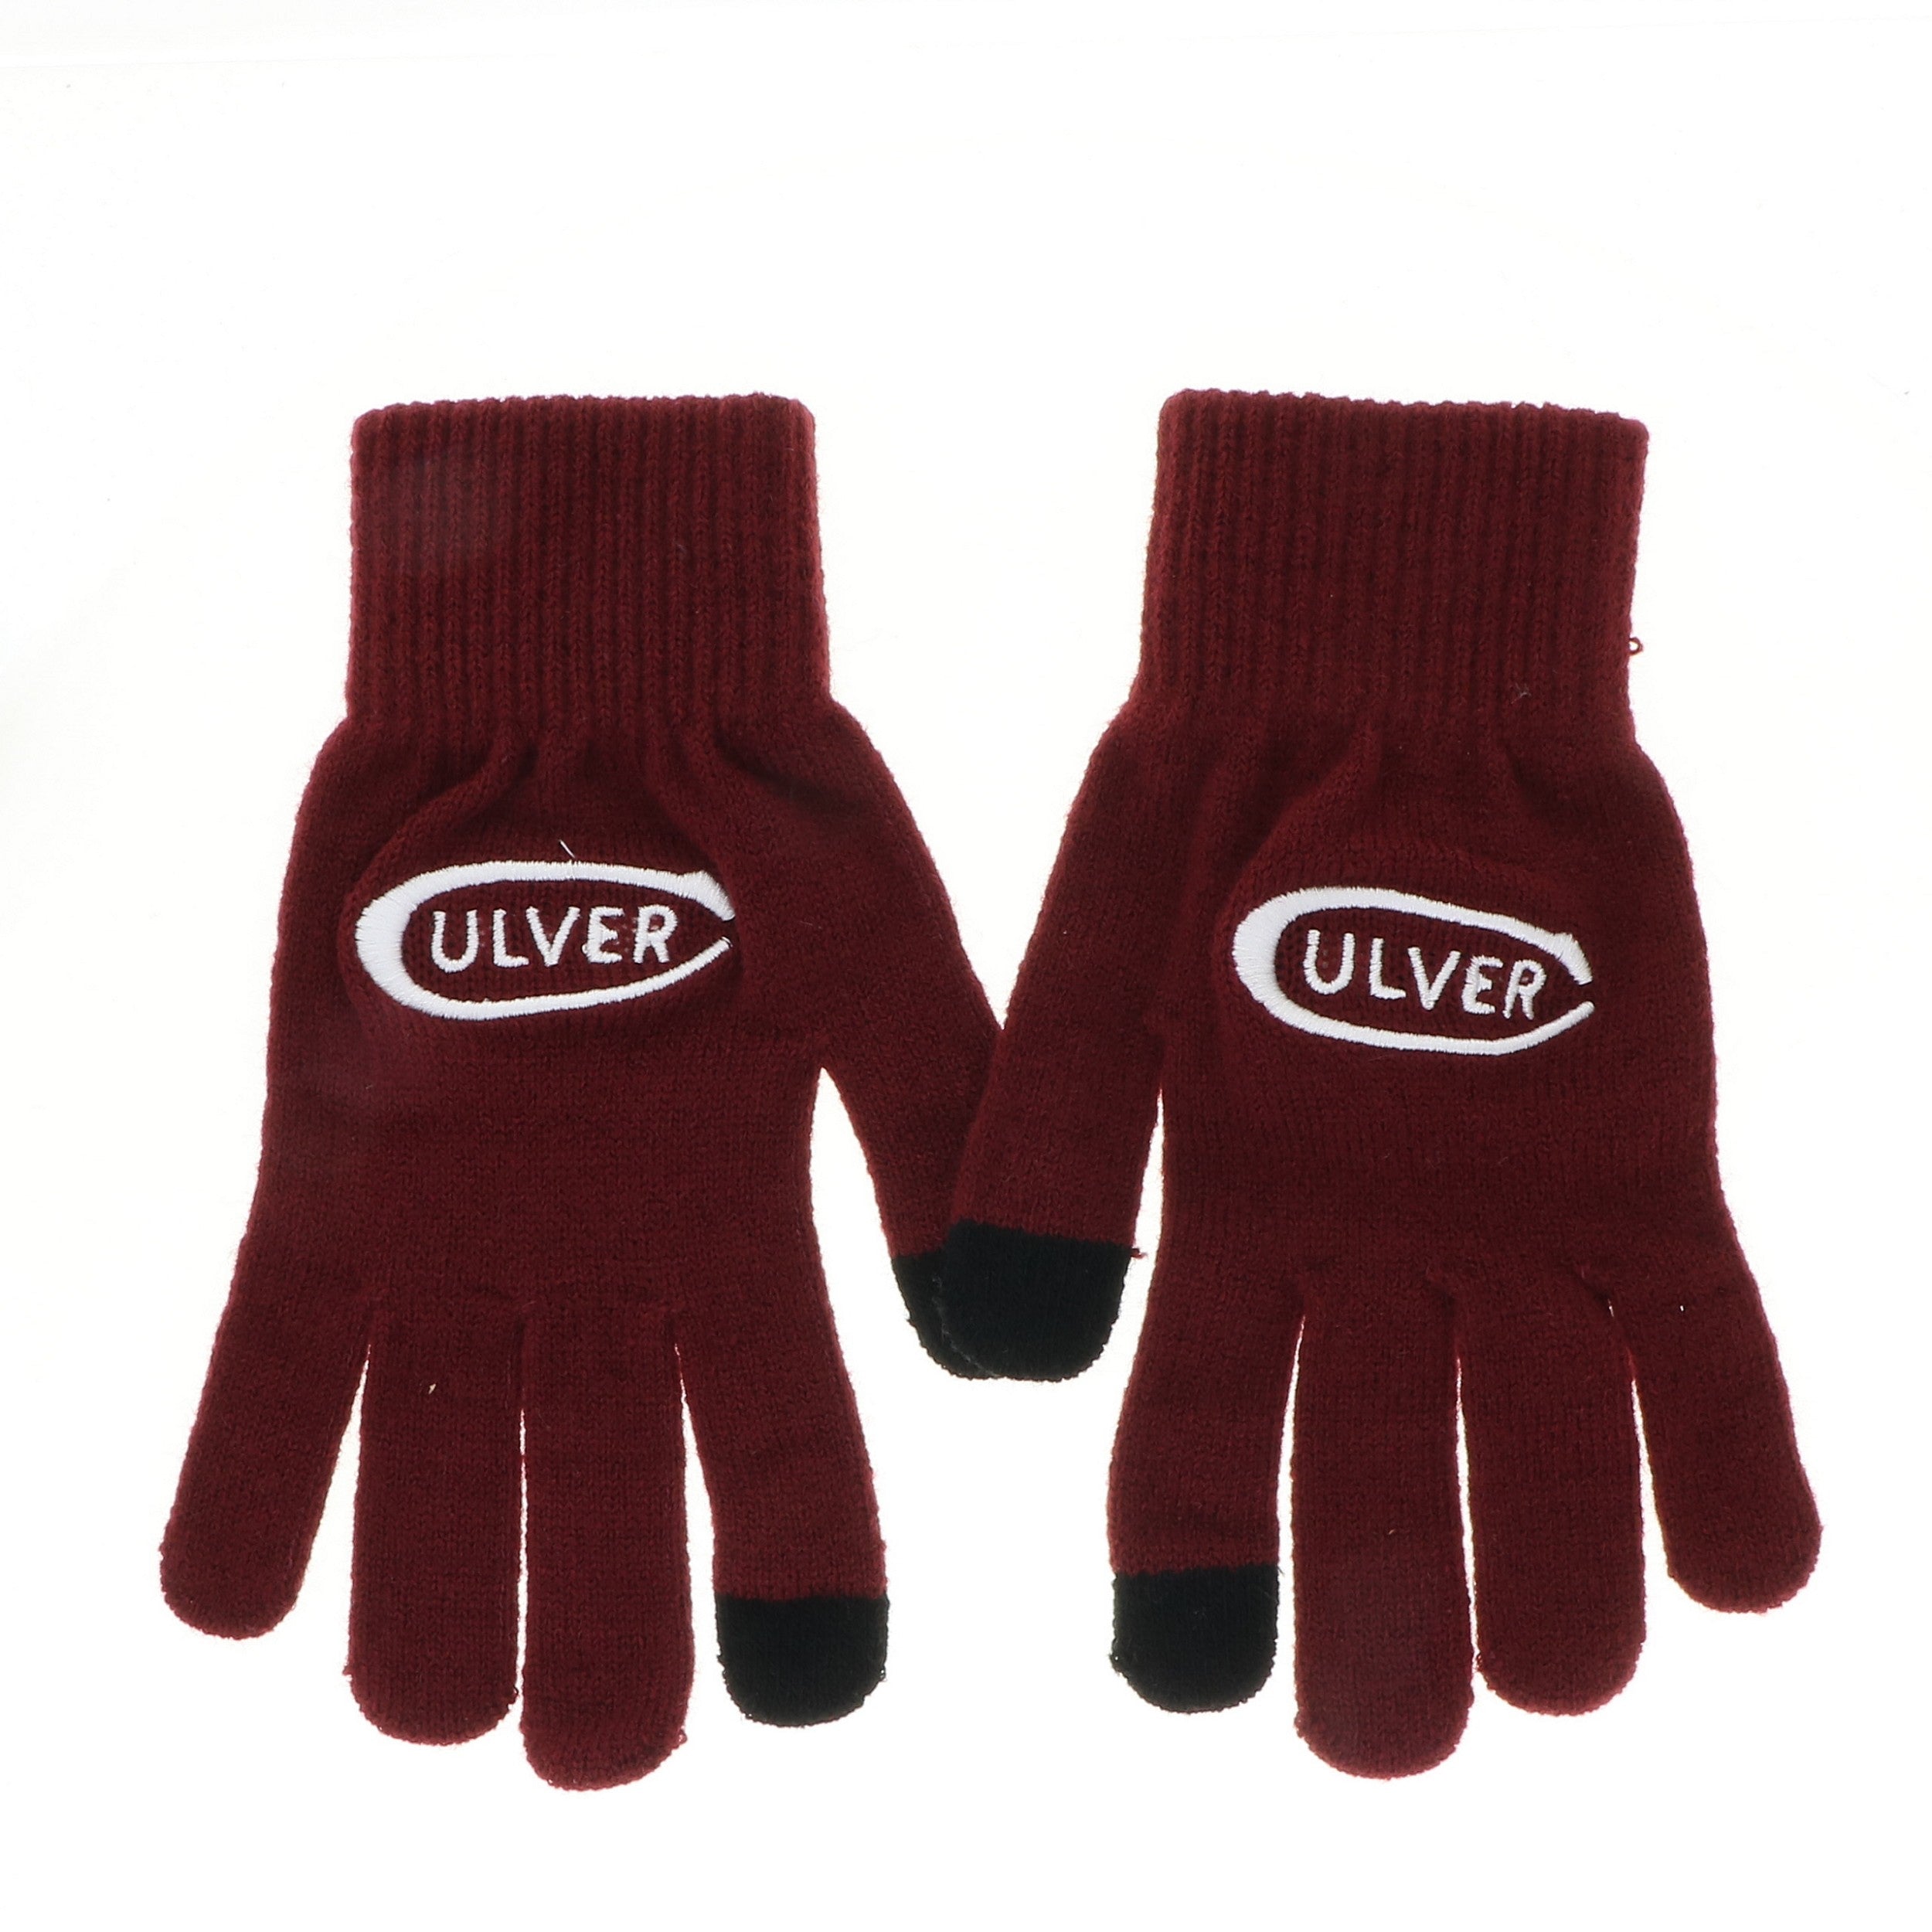 Culver Magic Gloves - Burgundy